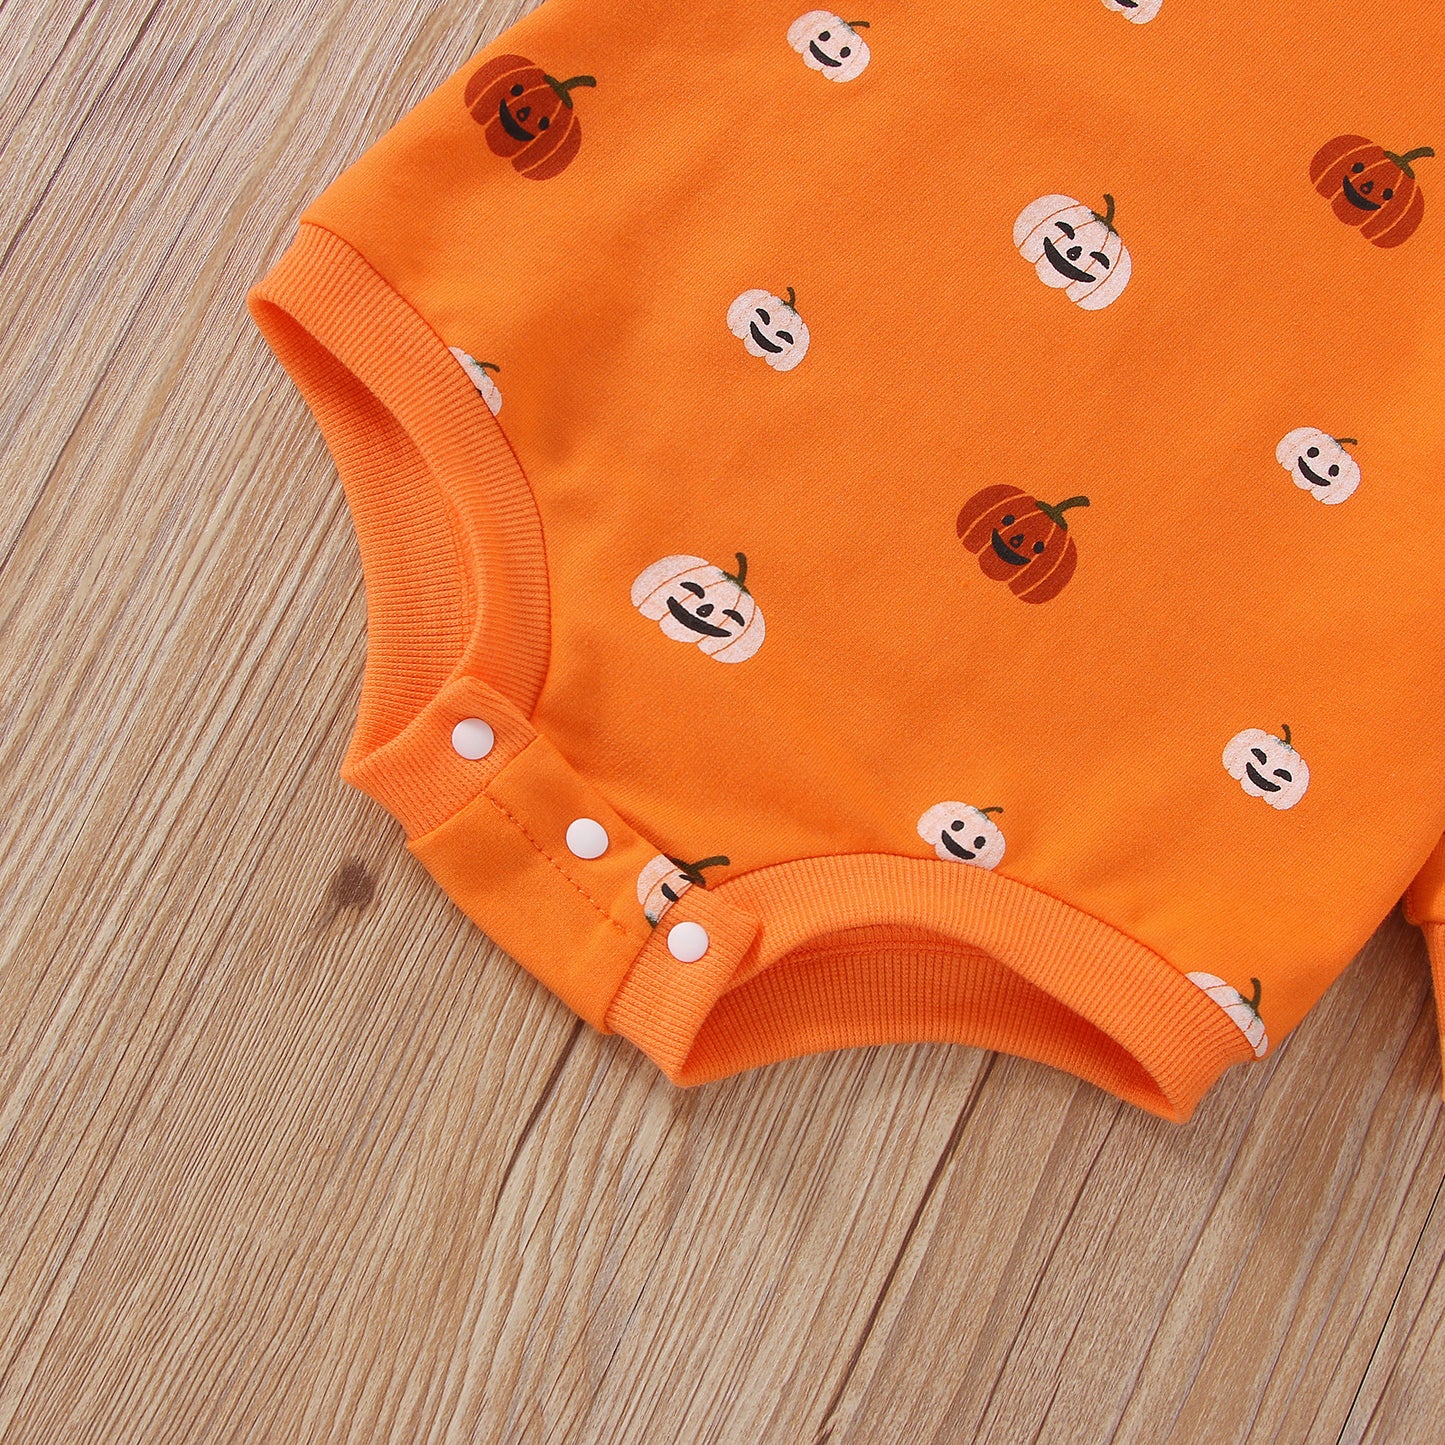 Infant Toddler Unisex Halloween Pumpkin Print Long Sleeve Sweater Romper Bodysuit